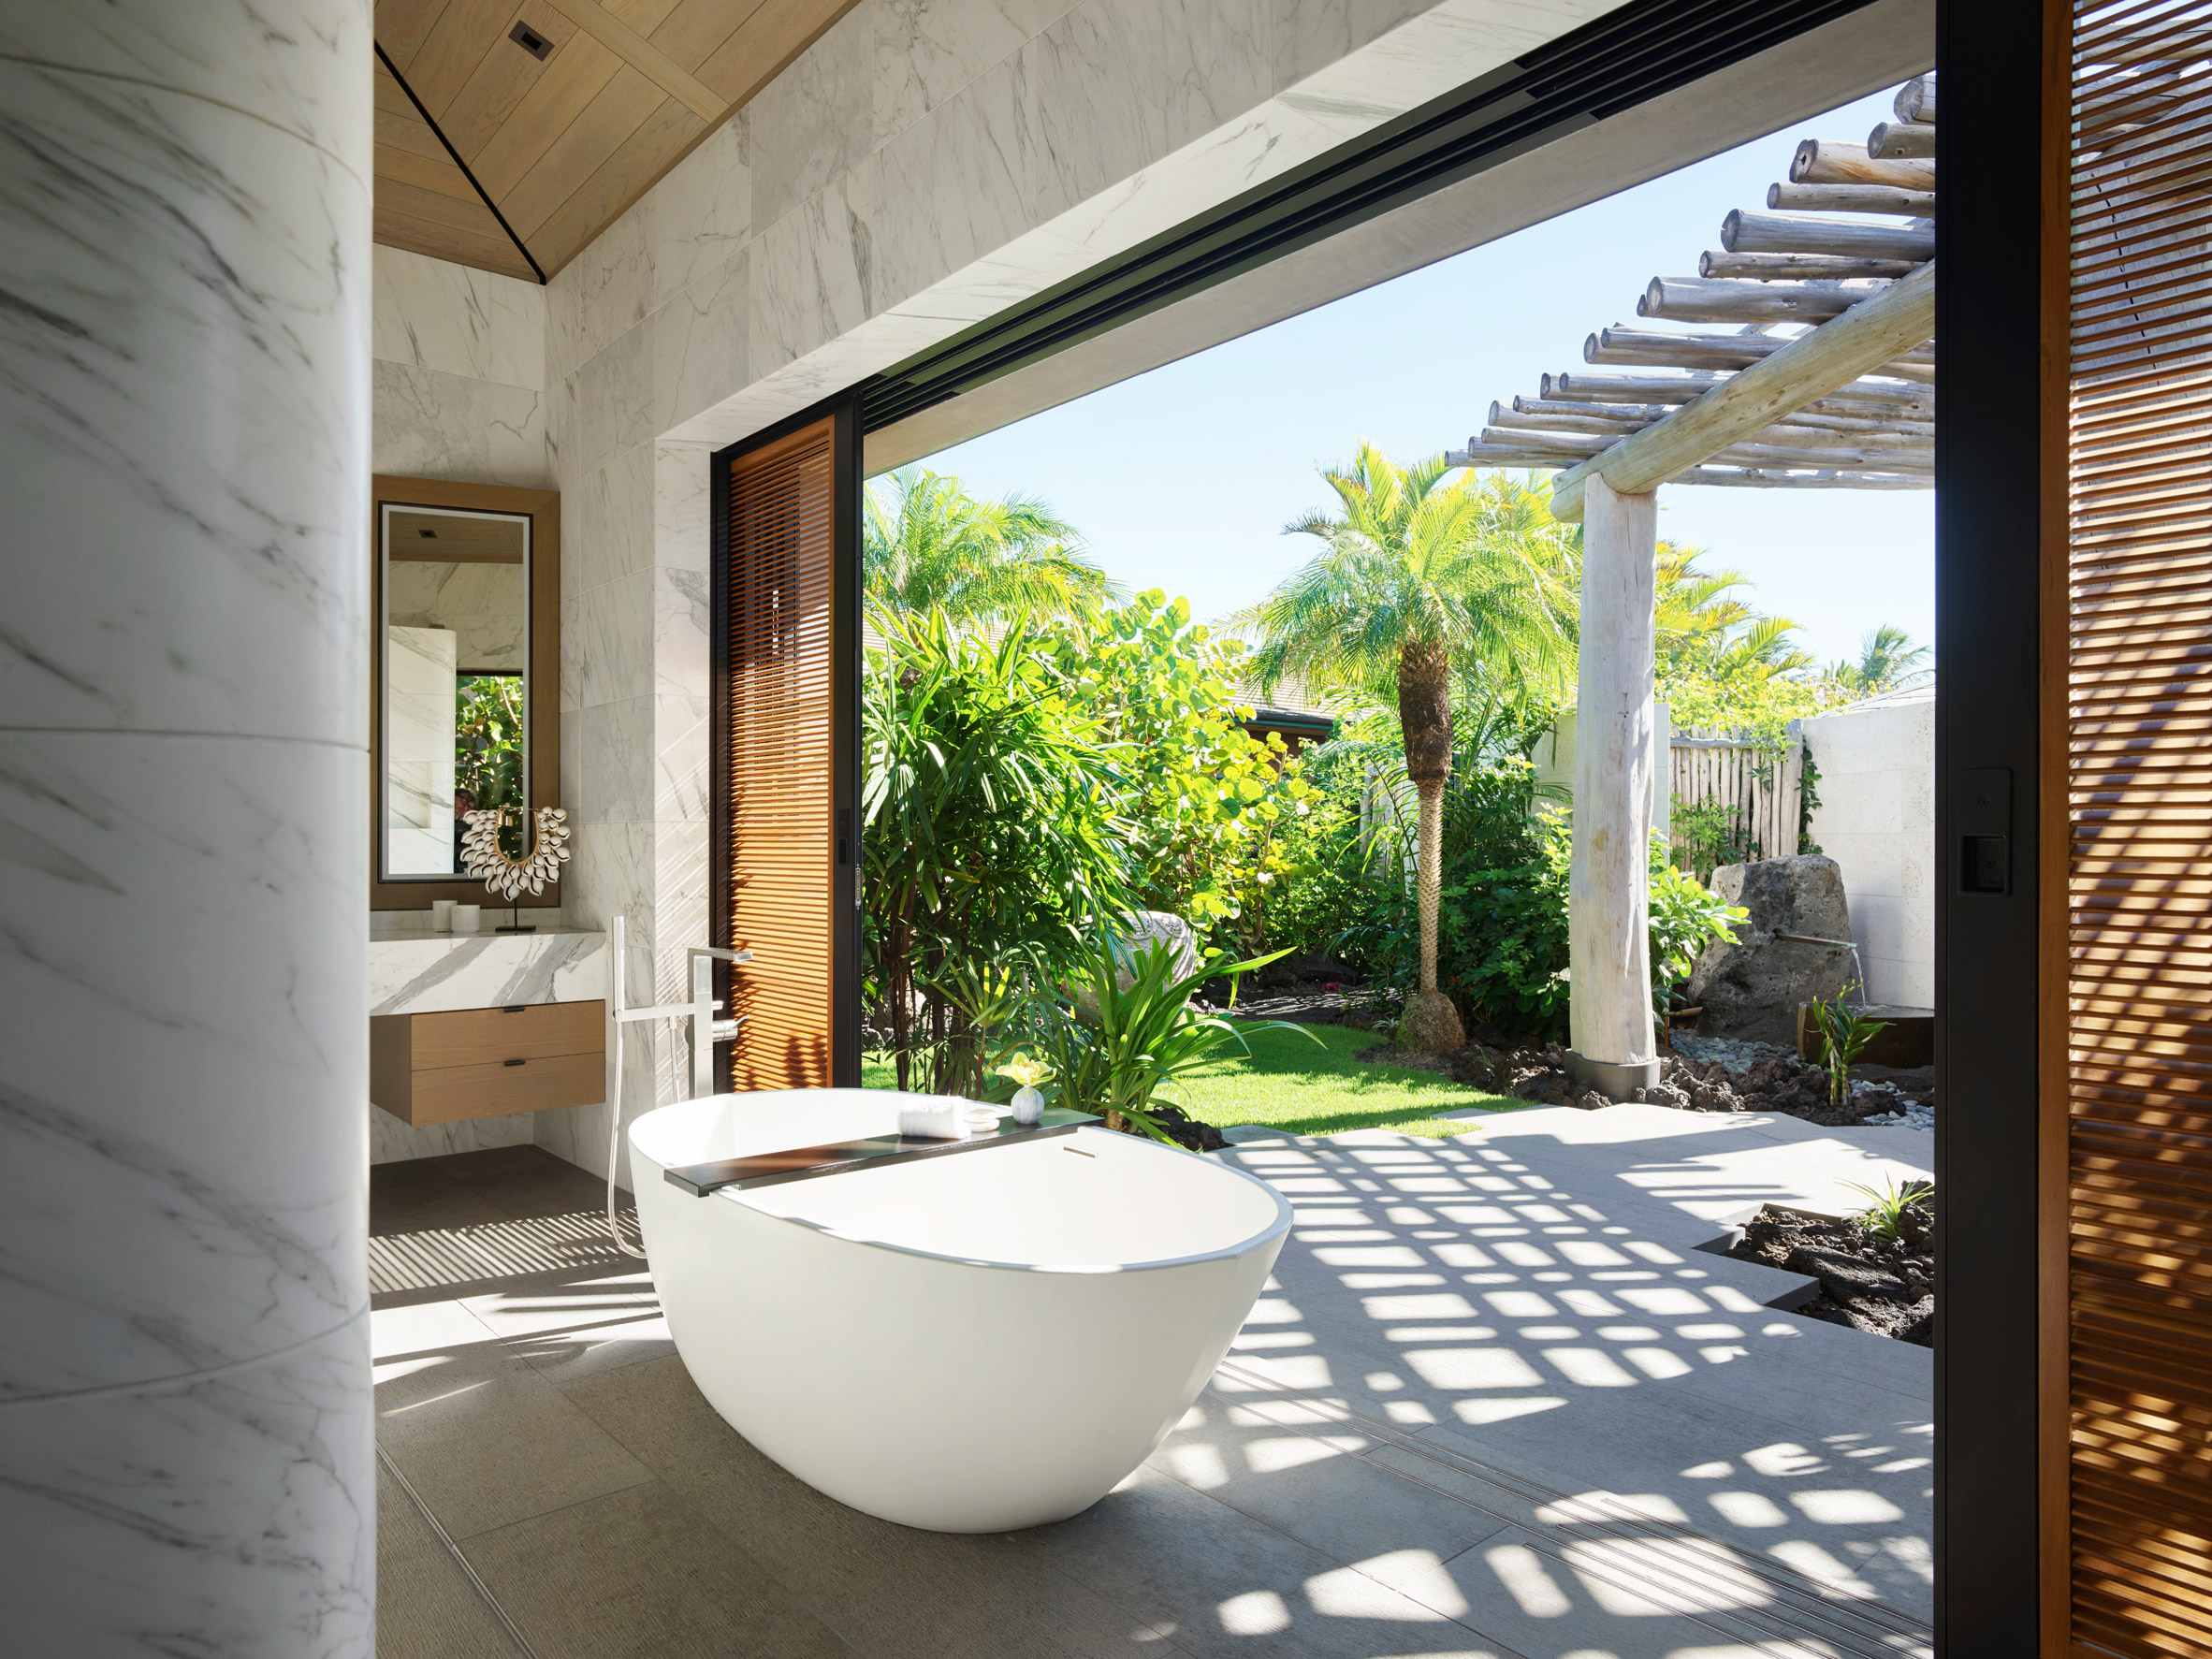 Marble clads the bathroom designed by de Reus Architects